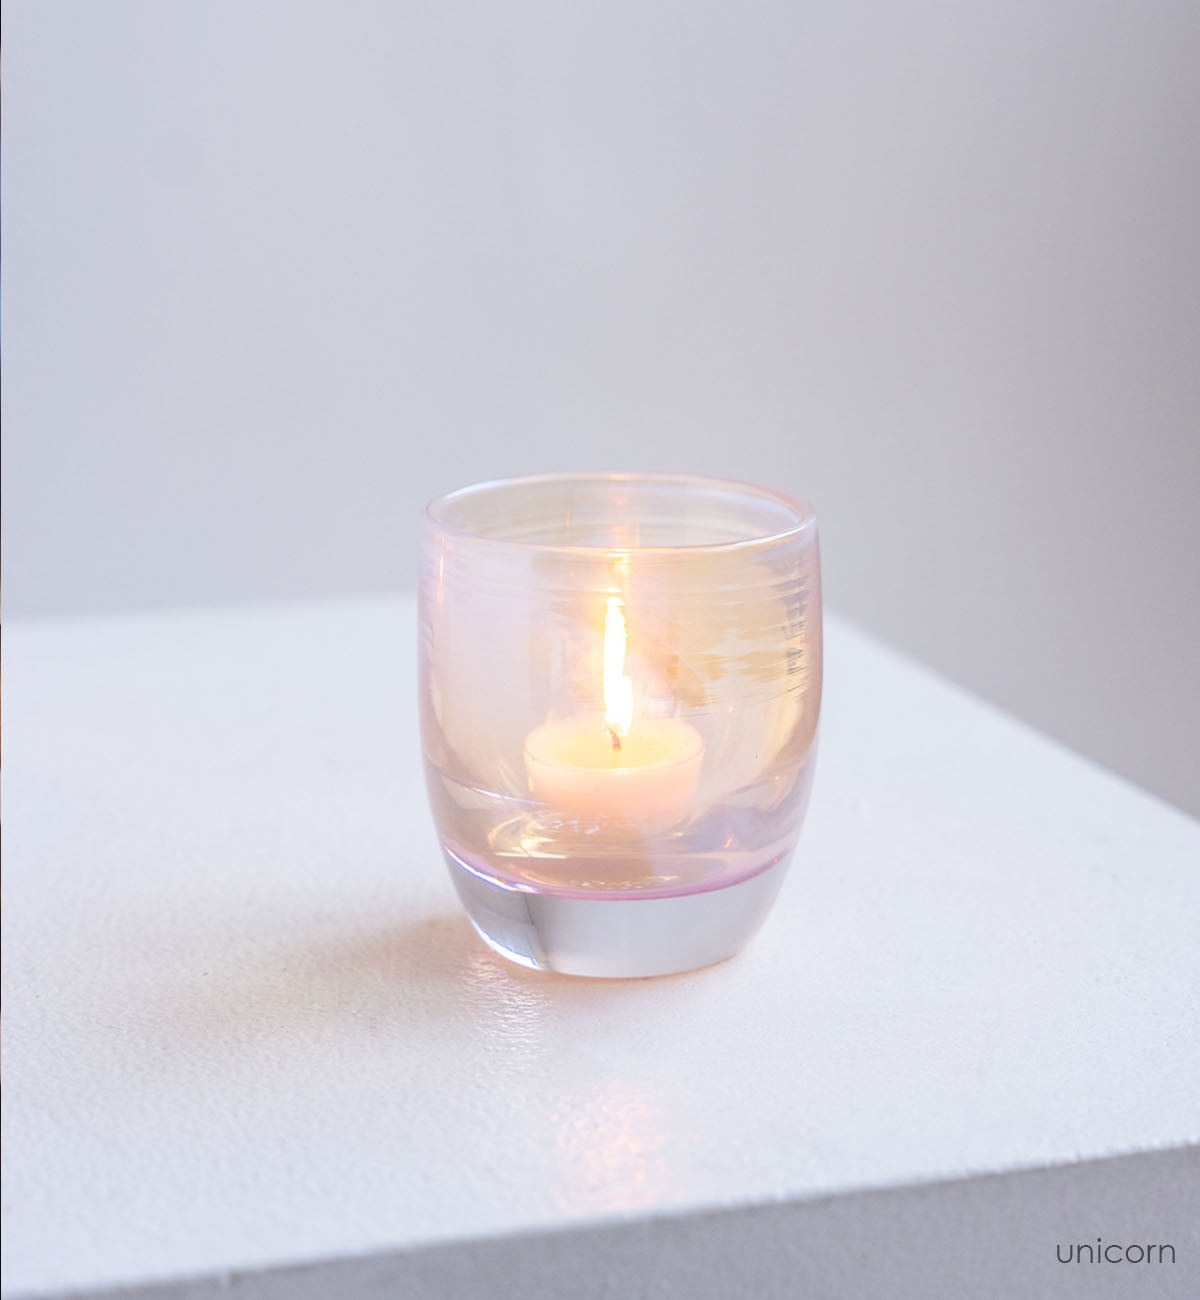 unicorn, iridescent pink hand-blown glass votive candle holder.